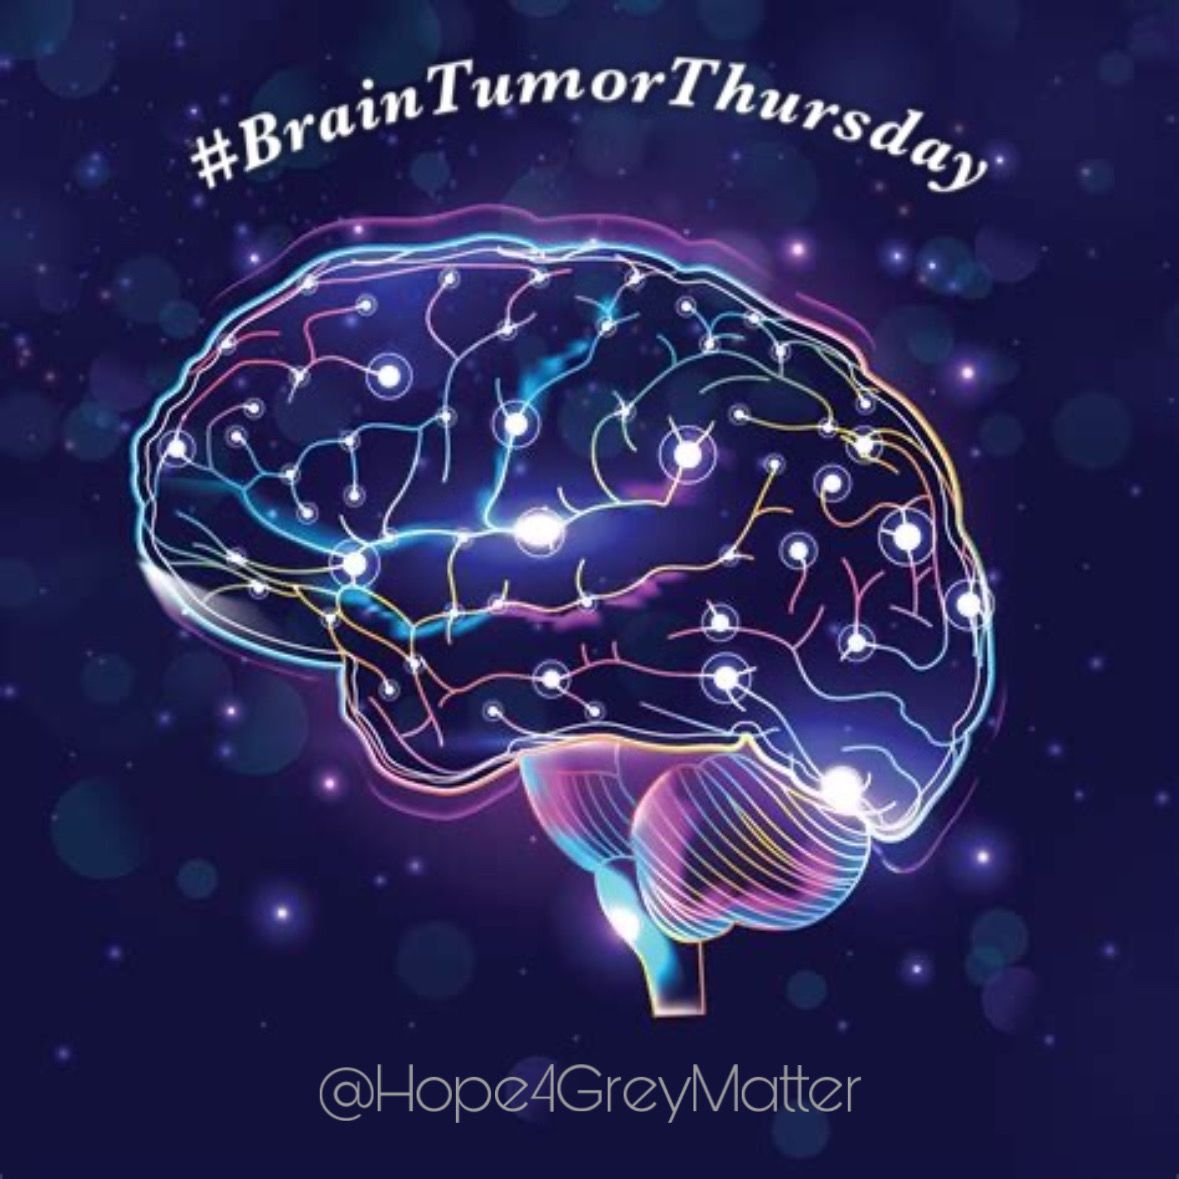 Hey 👋 , kiddos❗️It’s #BrainTumorThursday on #Twitter #Facebook and #Instagram – LEARN and SHARE 🧠💪 #31DaysOfGrey #31DaysOfGray #BrainTumorAwarenessMonth #BTAM 
#BTSM #BrainTumorAwareness #HOPE #H4GM 💫